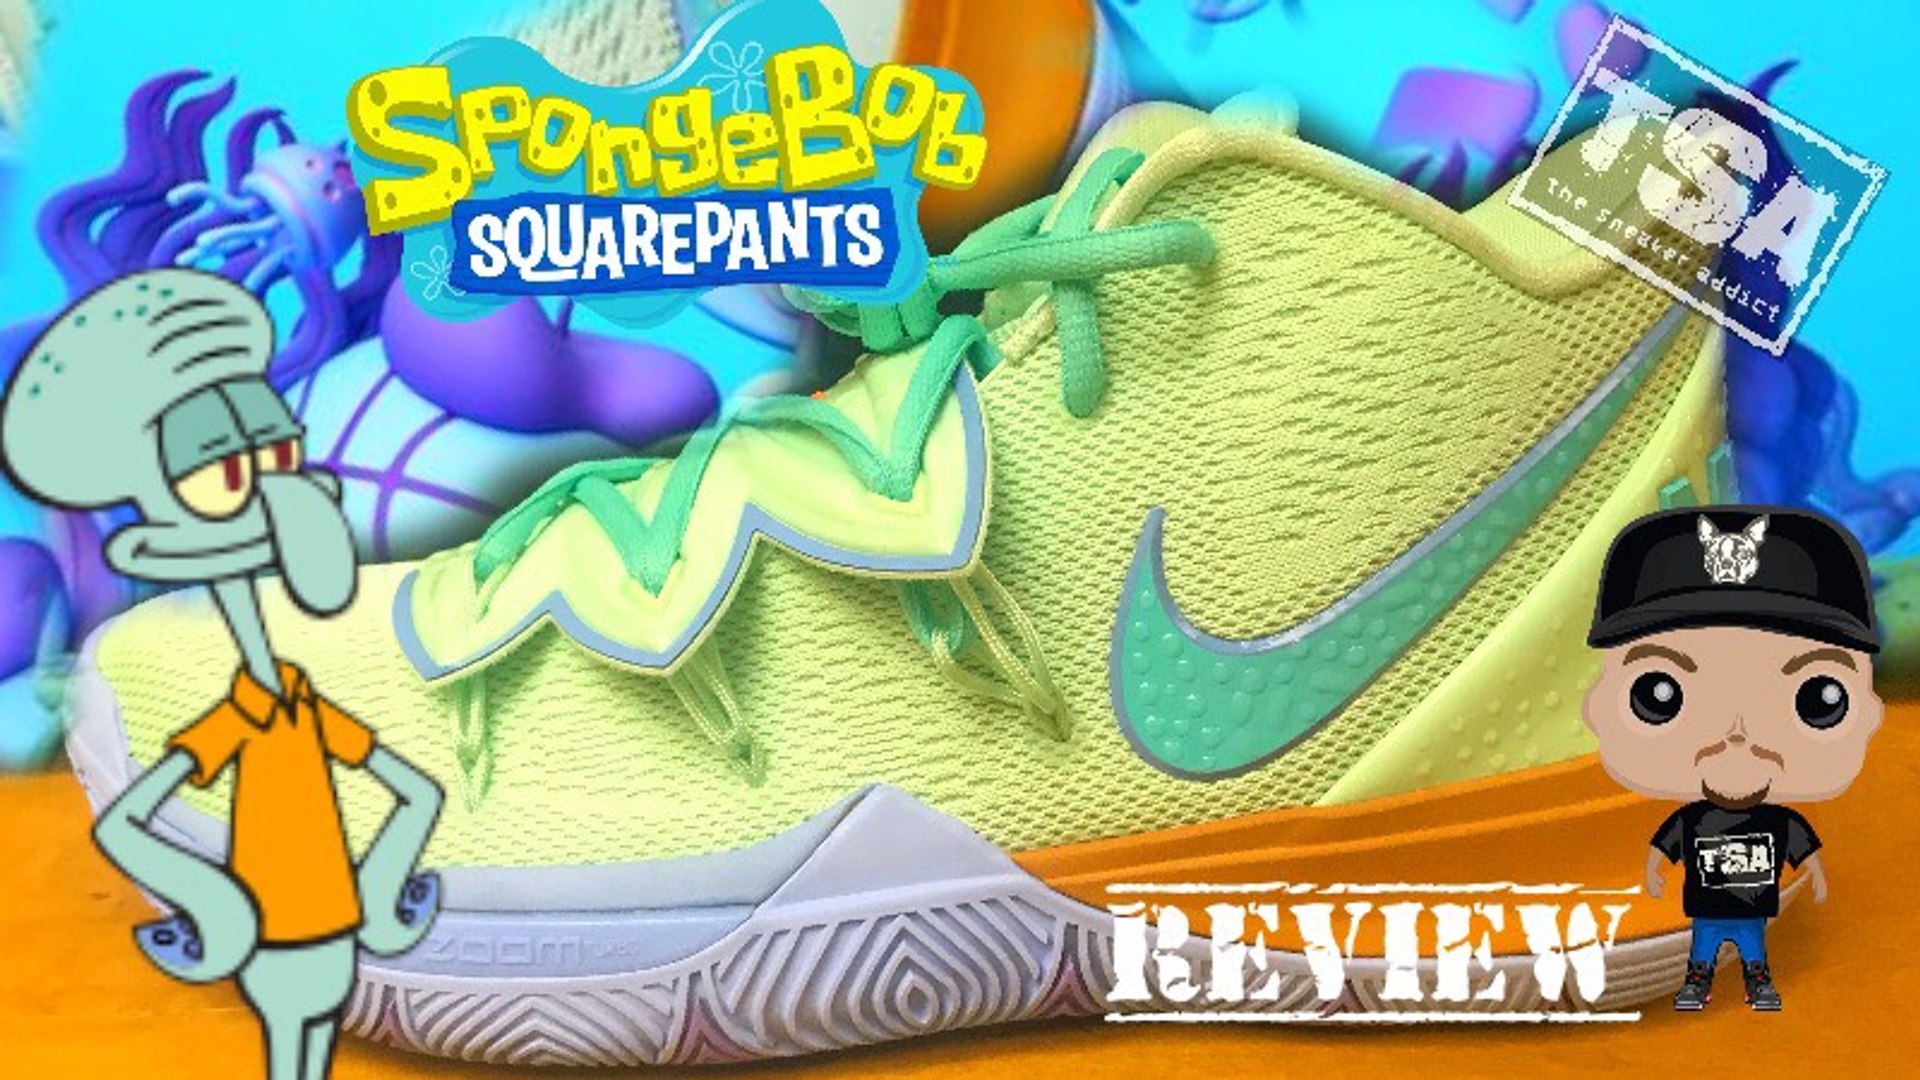  New listing Nike Kyrie 5 SpongeBob SquarePants Color Sports